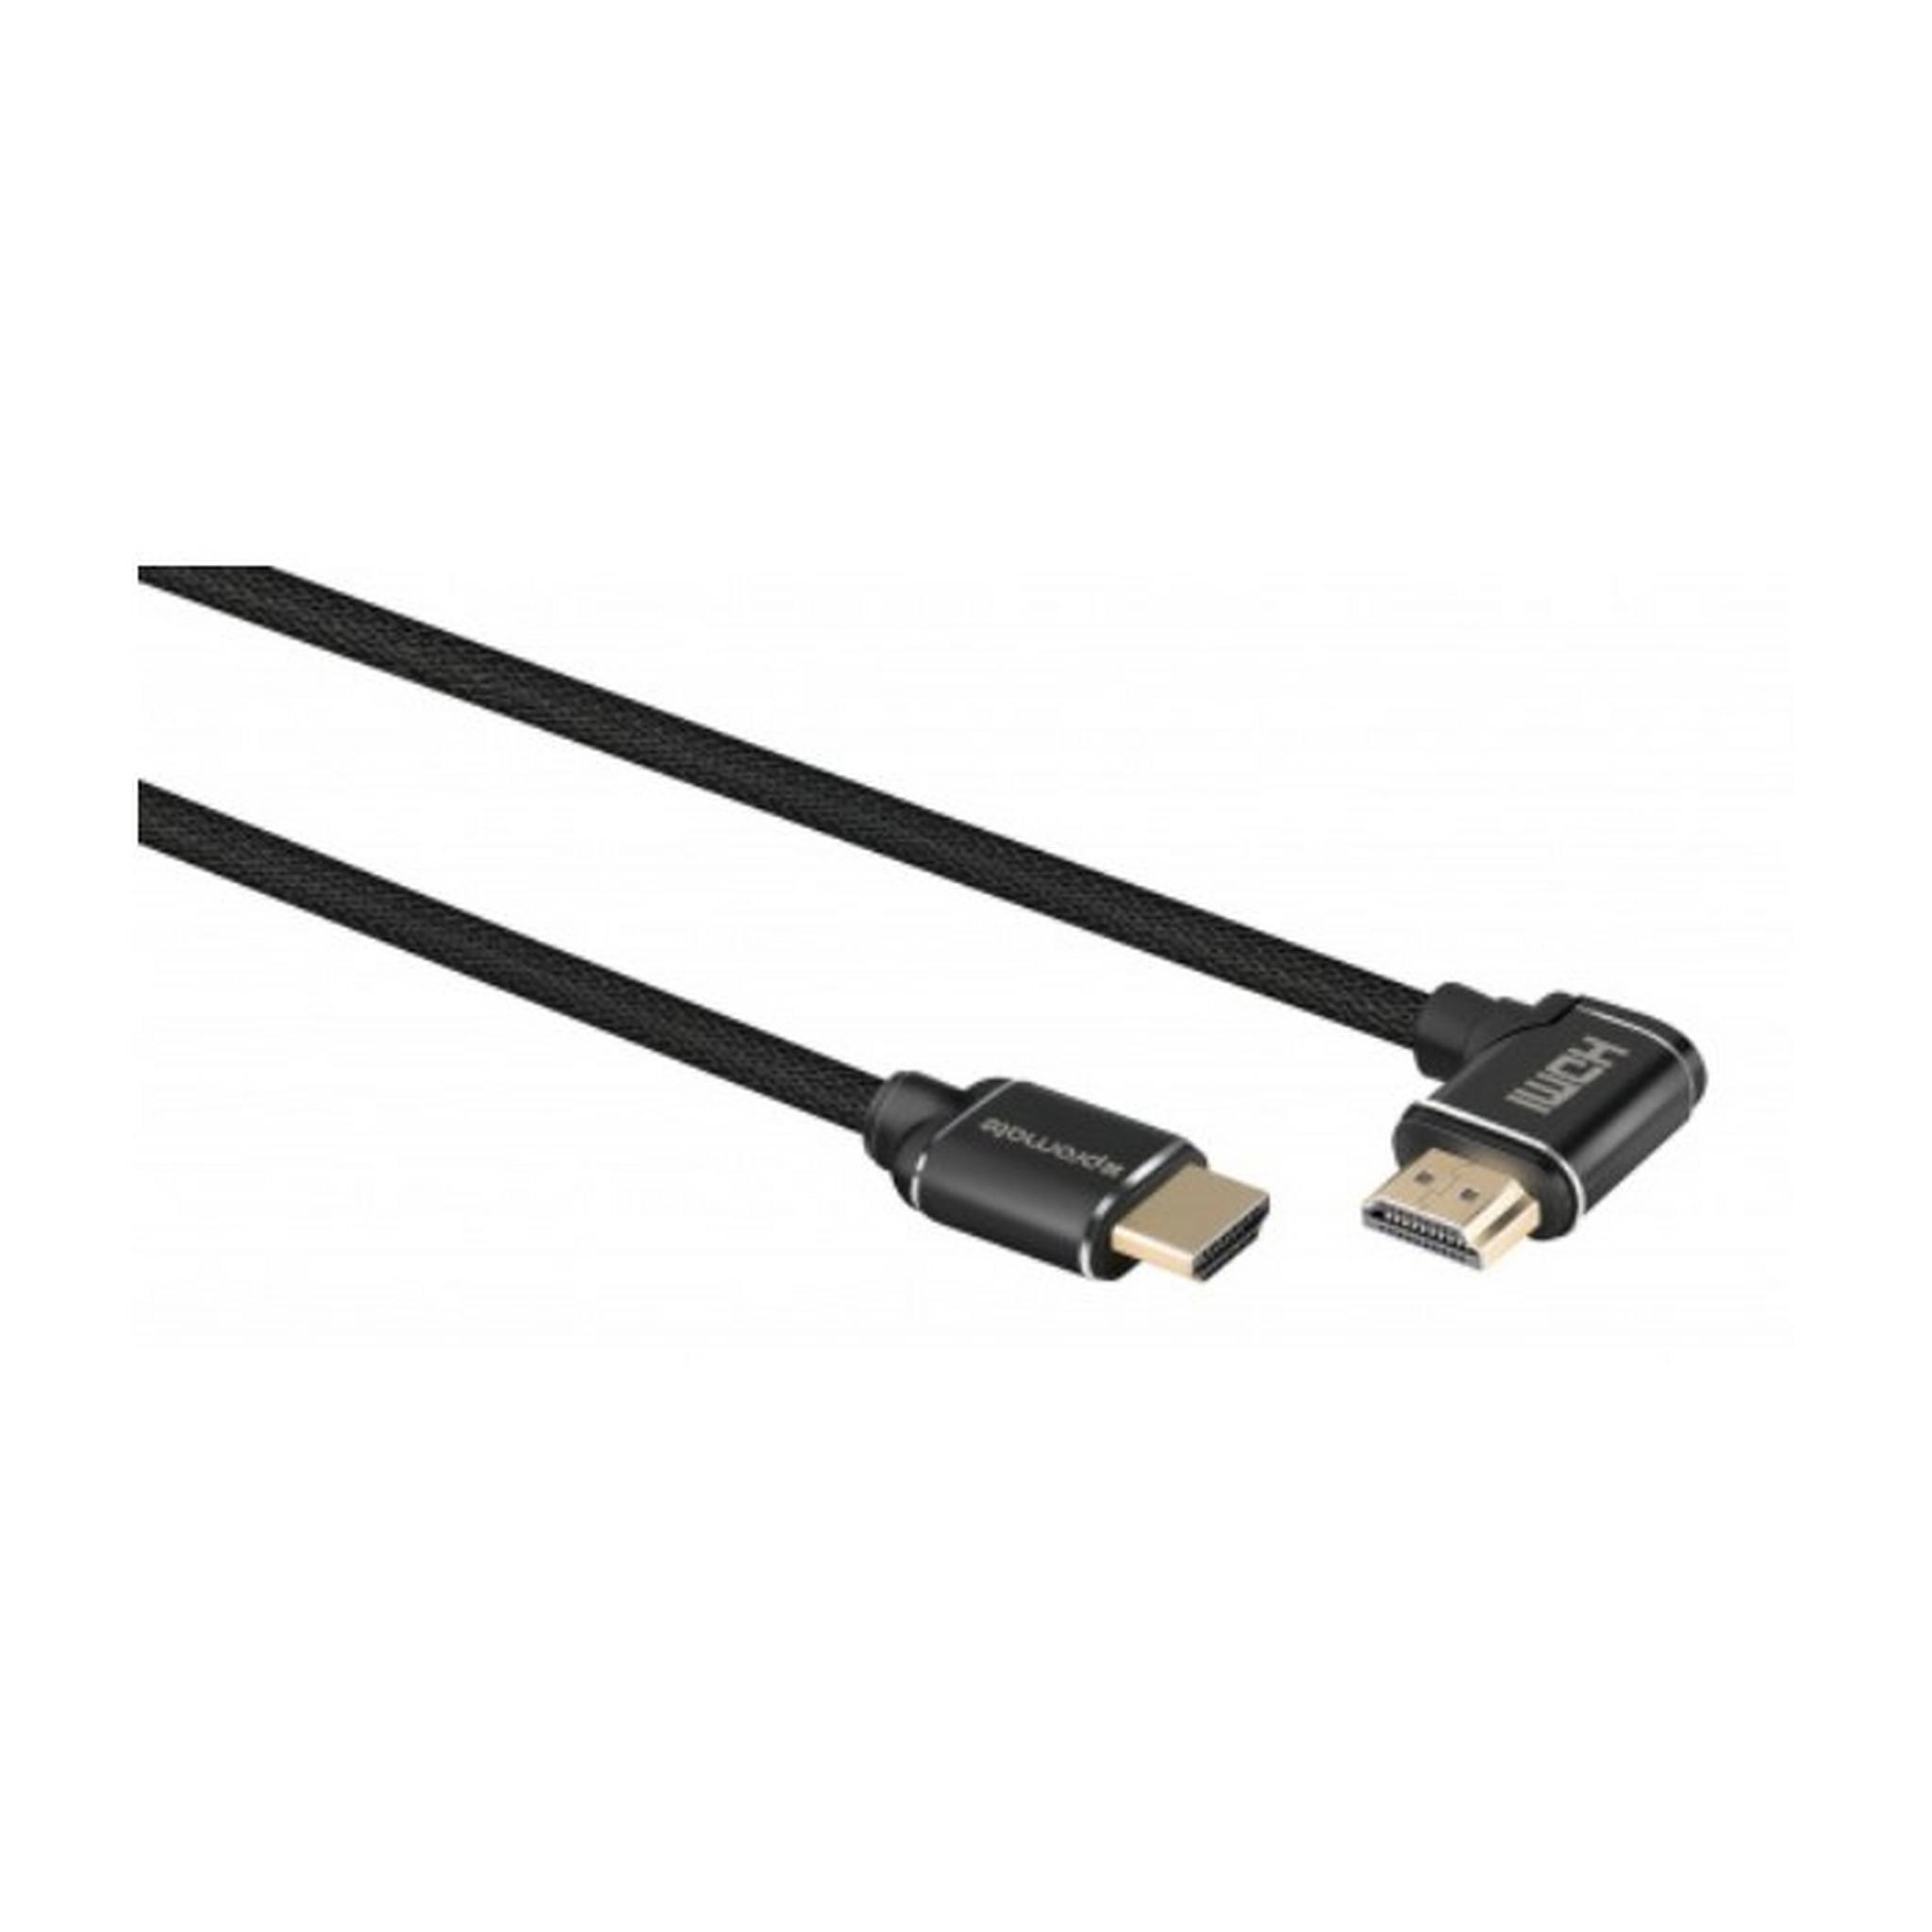 Promate ProLink4 HDMI Audio Video Cable - Black